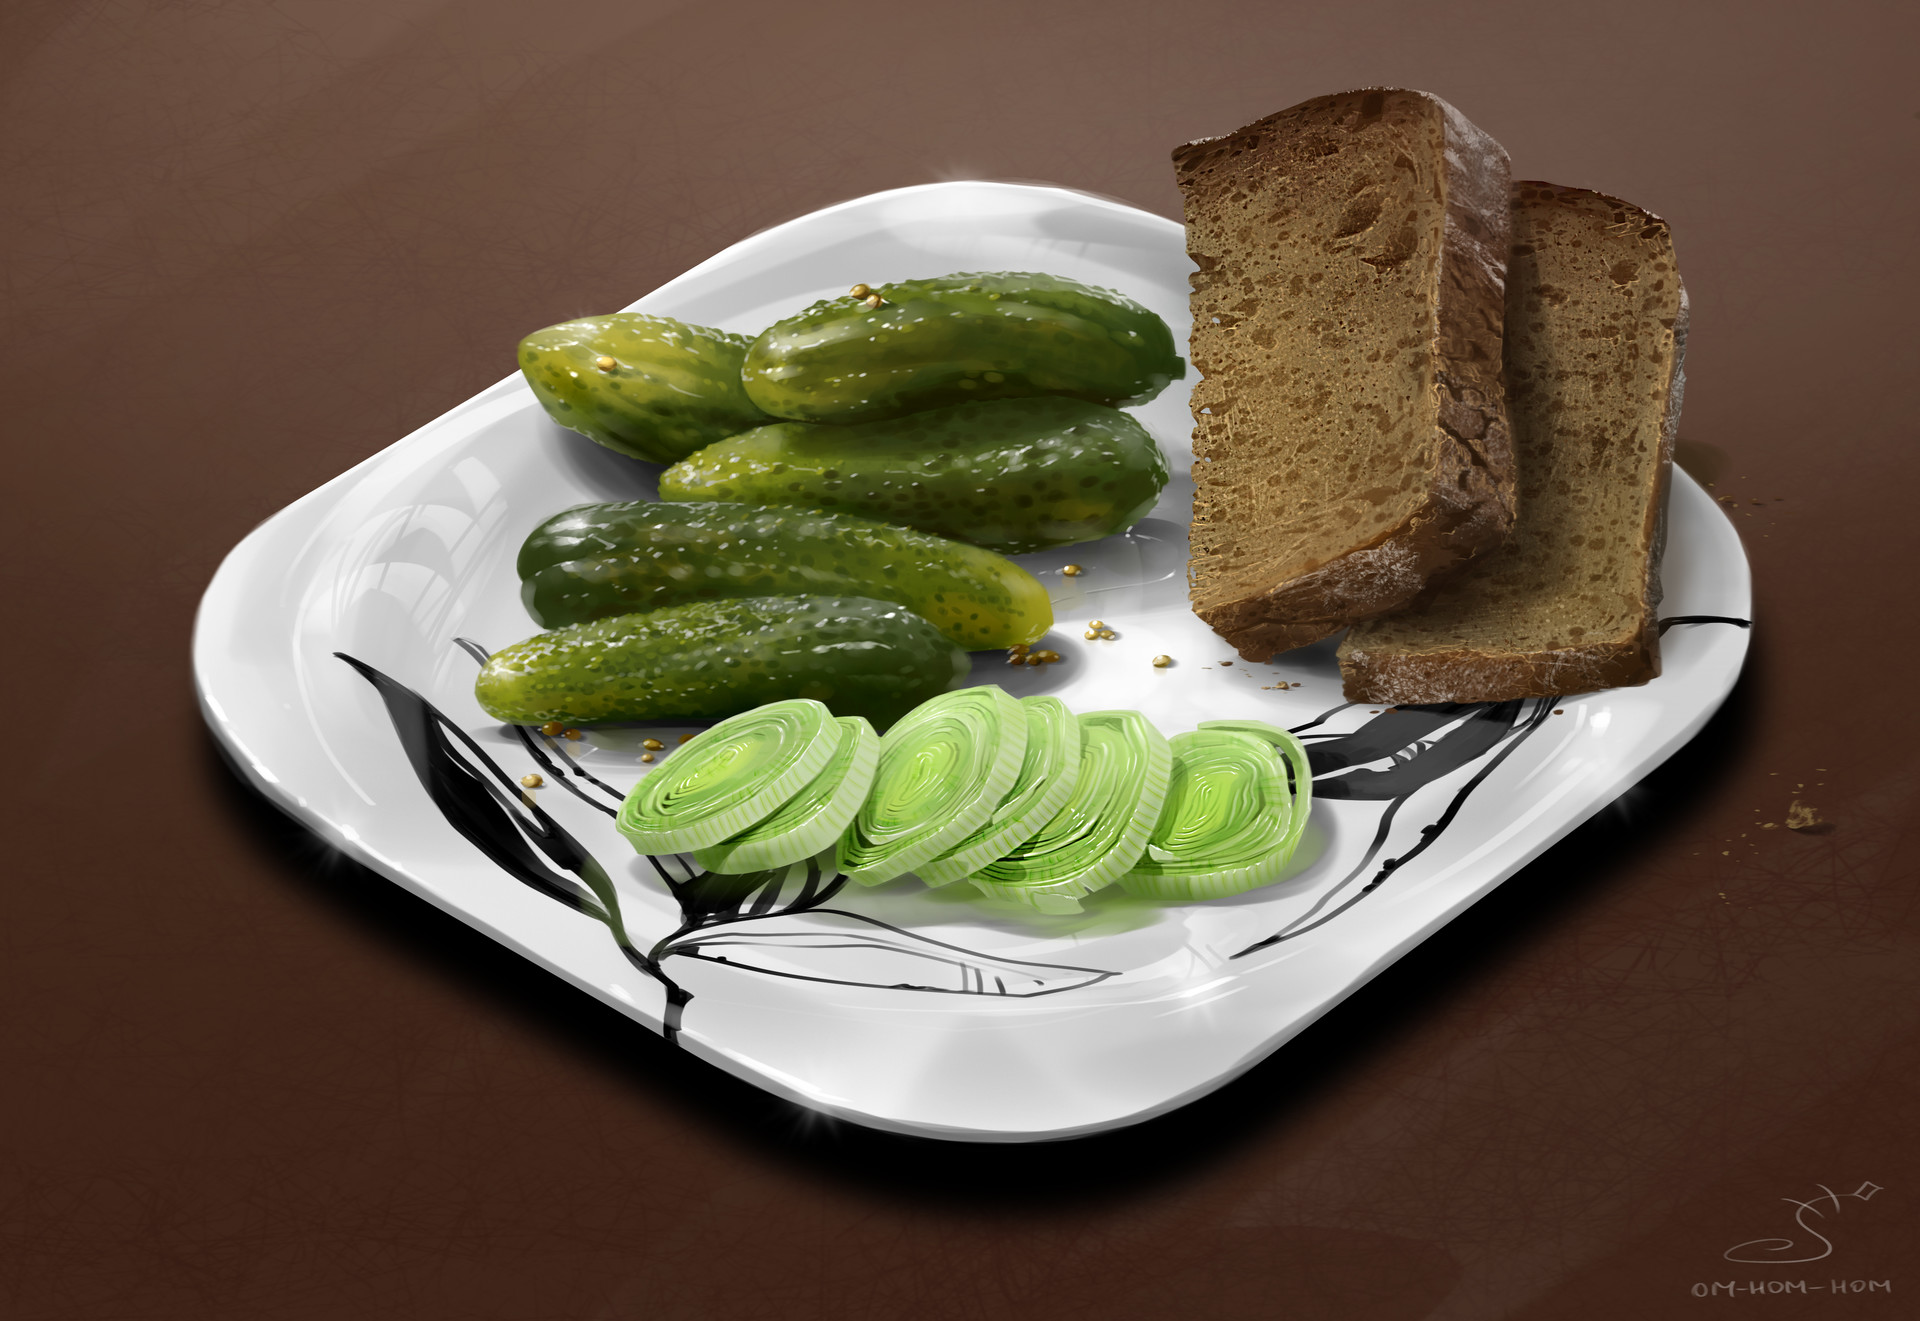 Artwork Food Cucumber Bread Pickles Leek 1920x1321